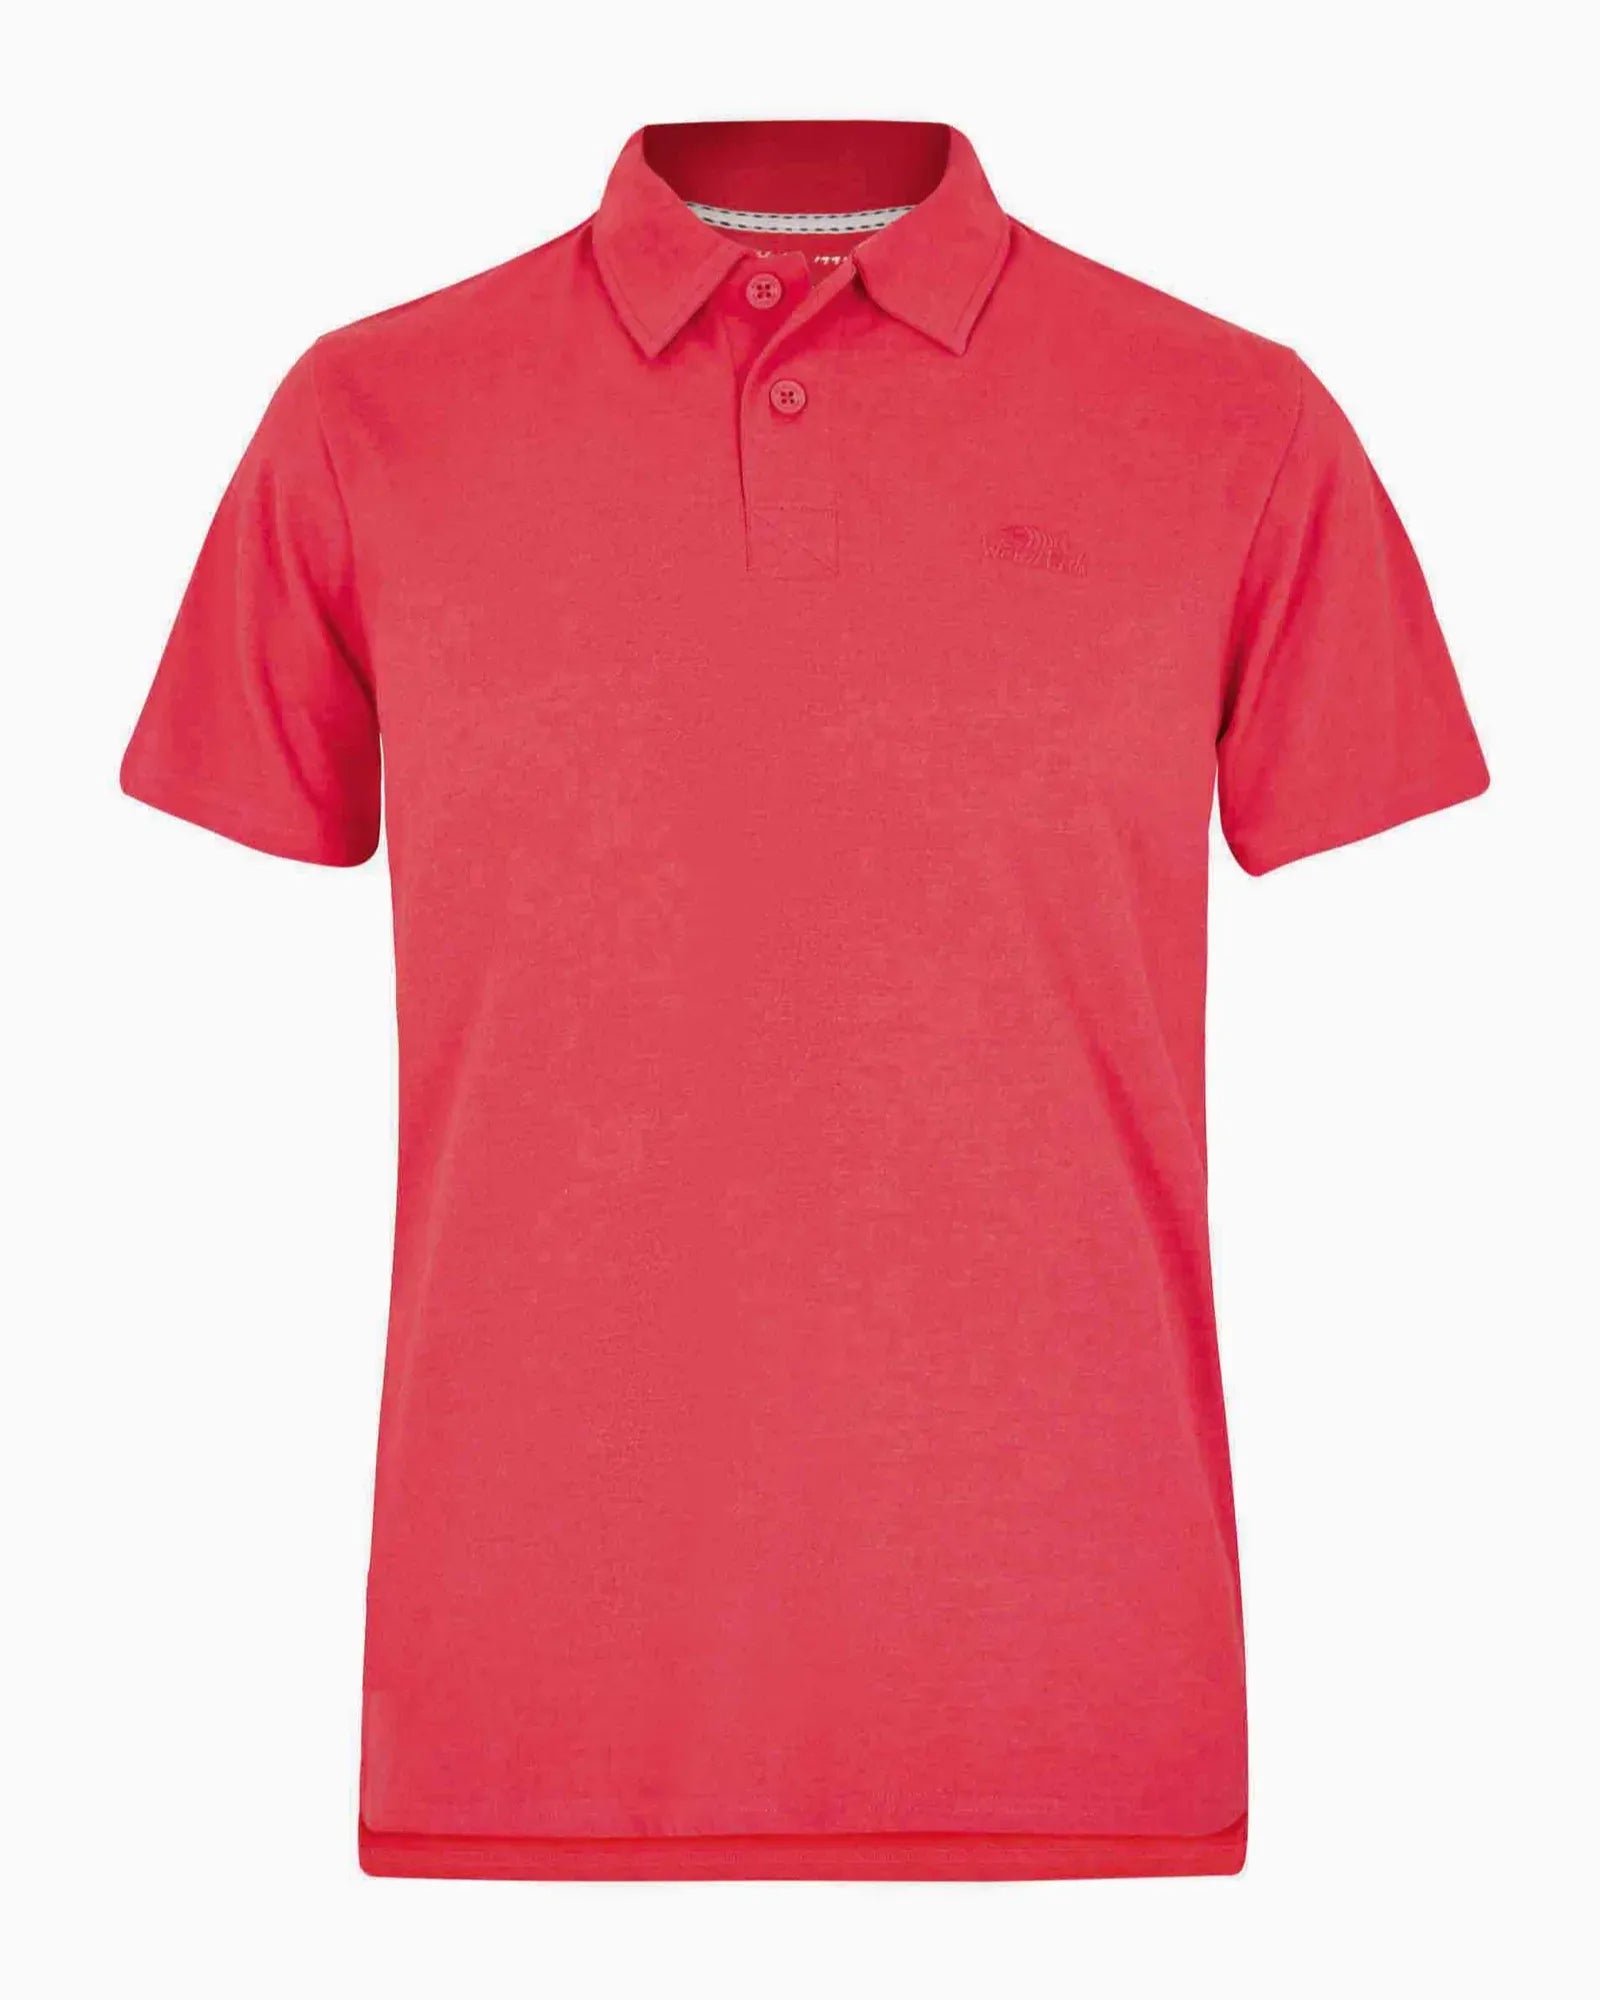 Jetstream Radical Red Polo Shirt